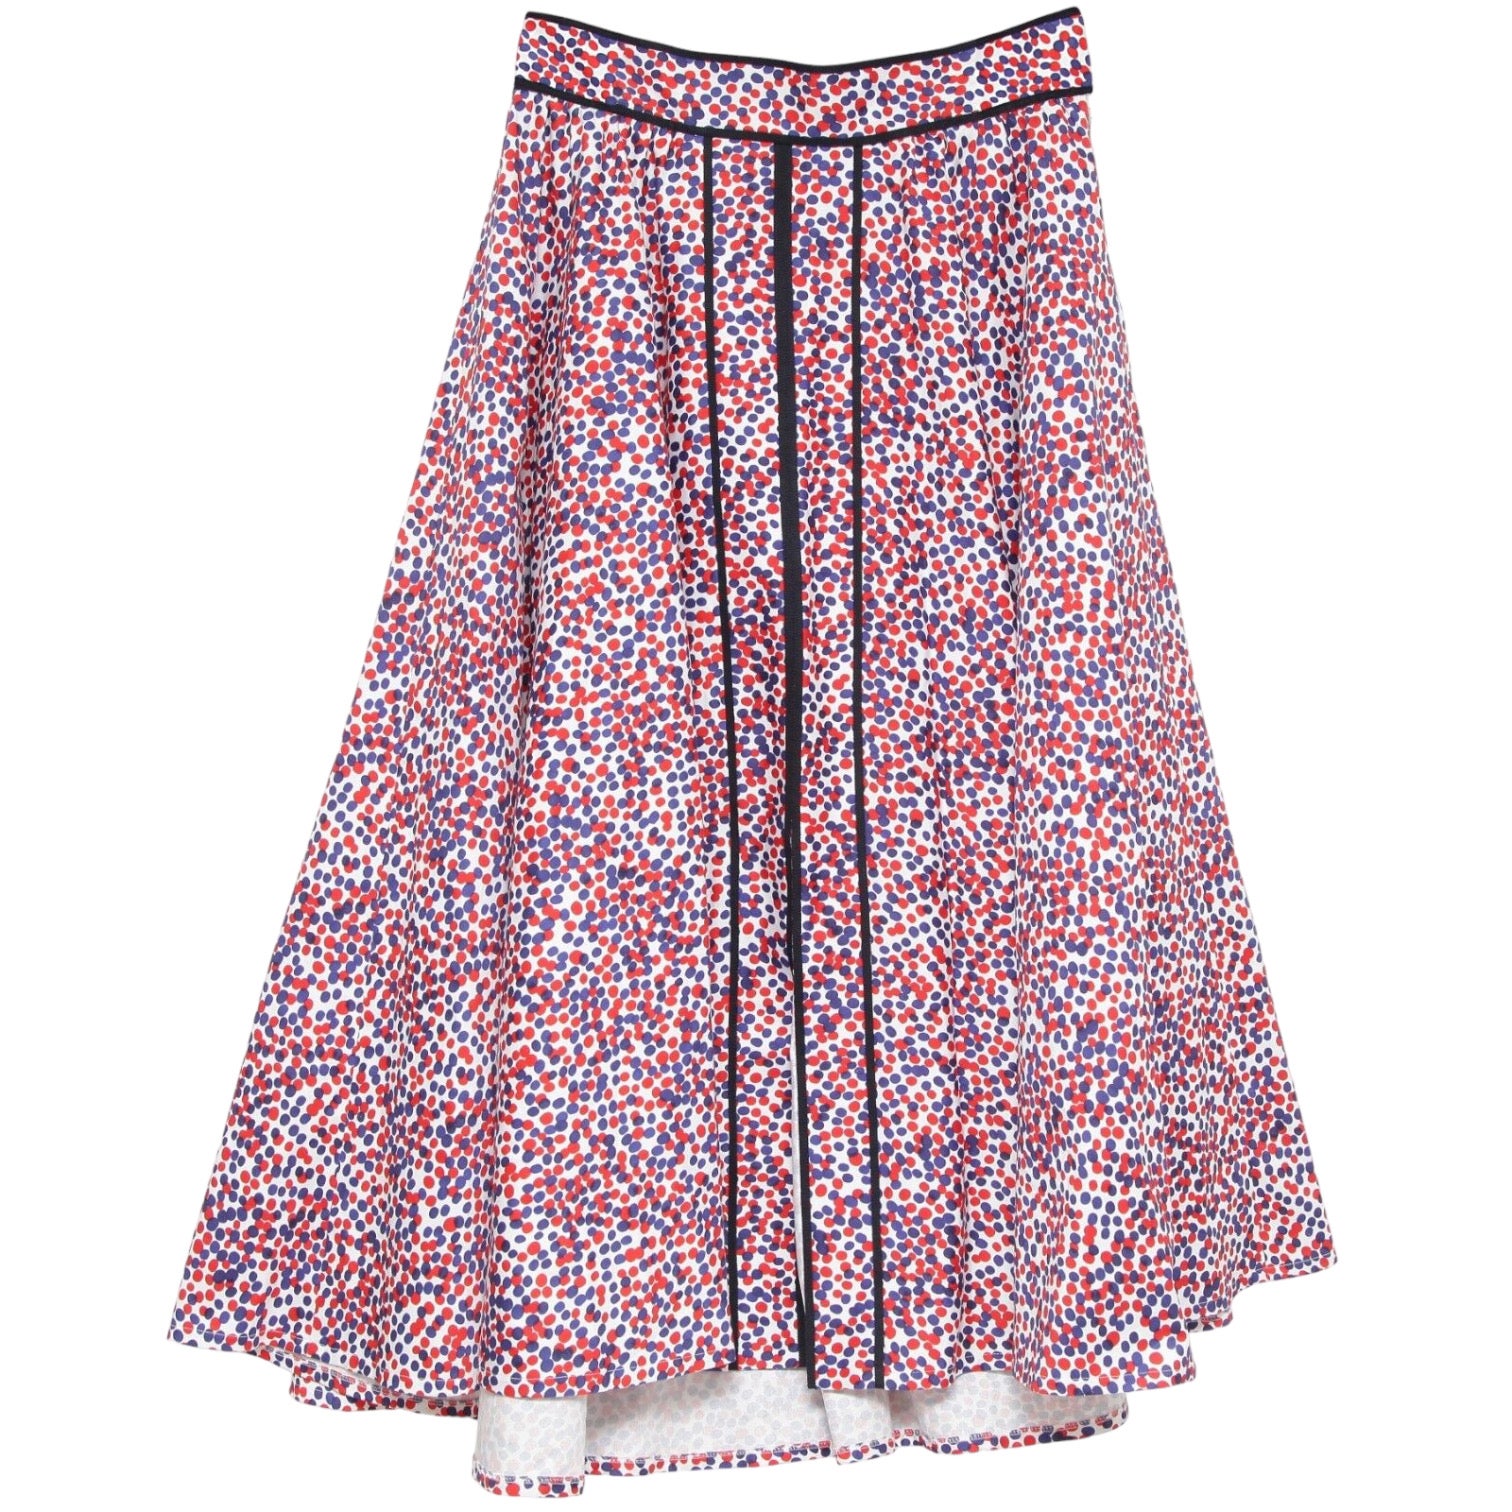 CAROLINA HERRERA Skirt Umbrella Polka Dot Full Maxi Cotton Blend Dress Sz 8